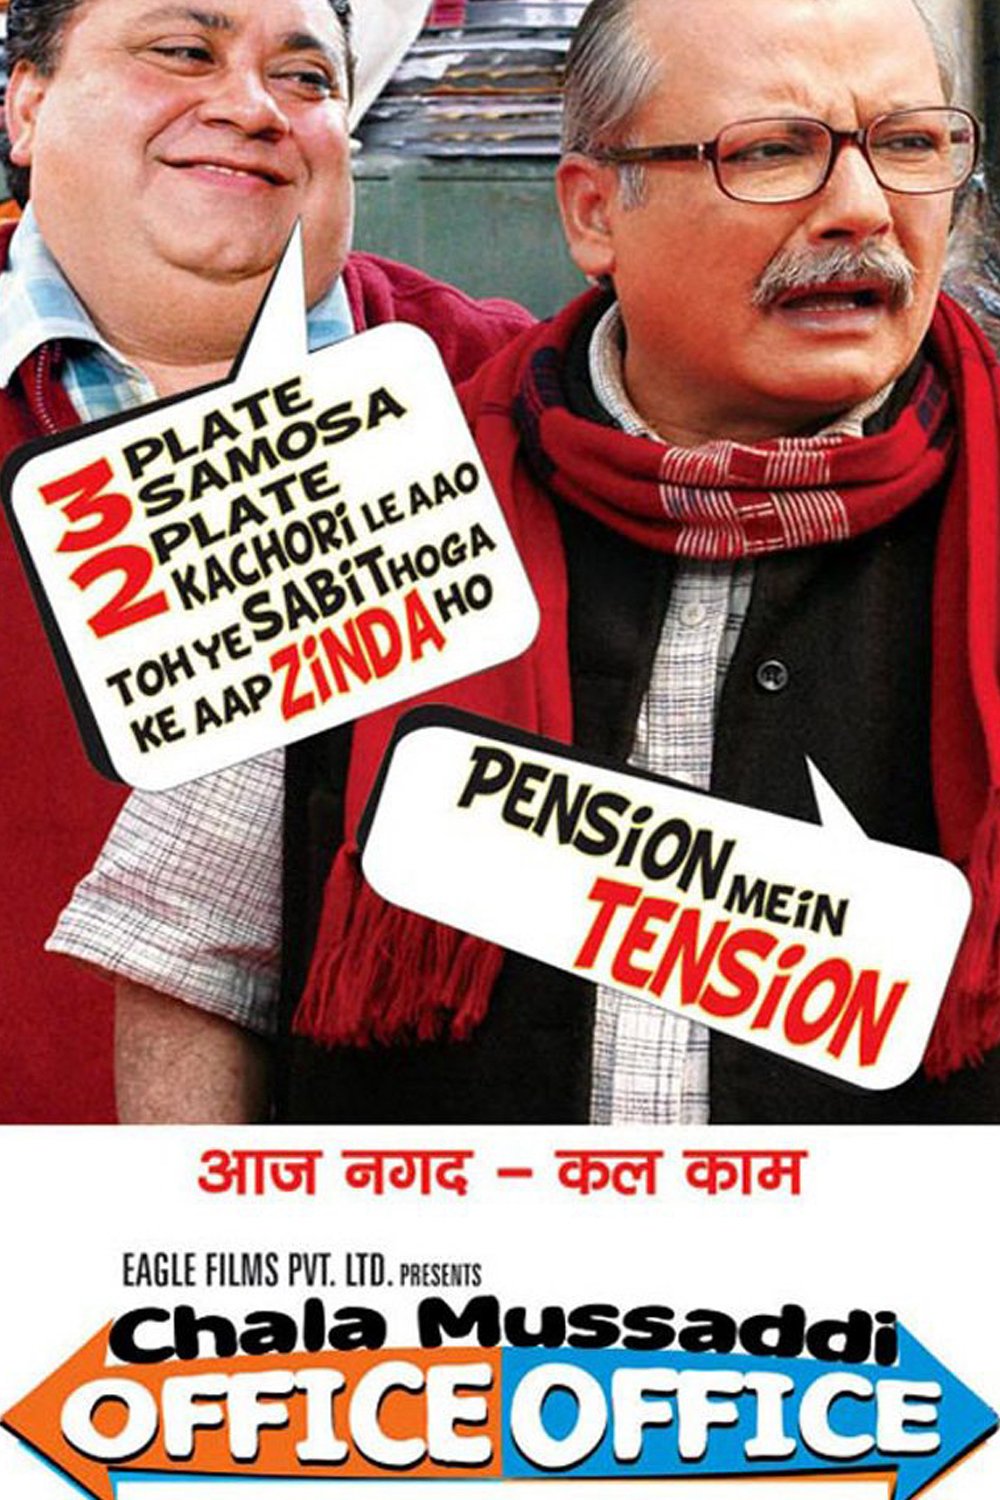 Chala Mussaddi - Office Office Movie Poster